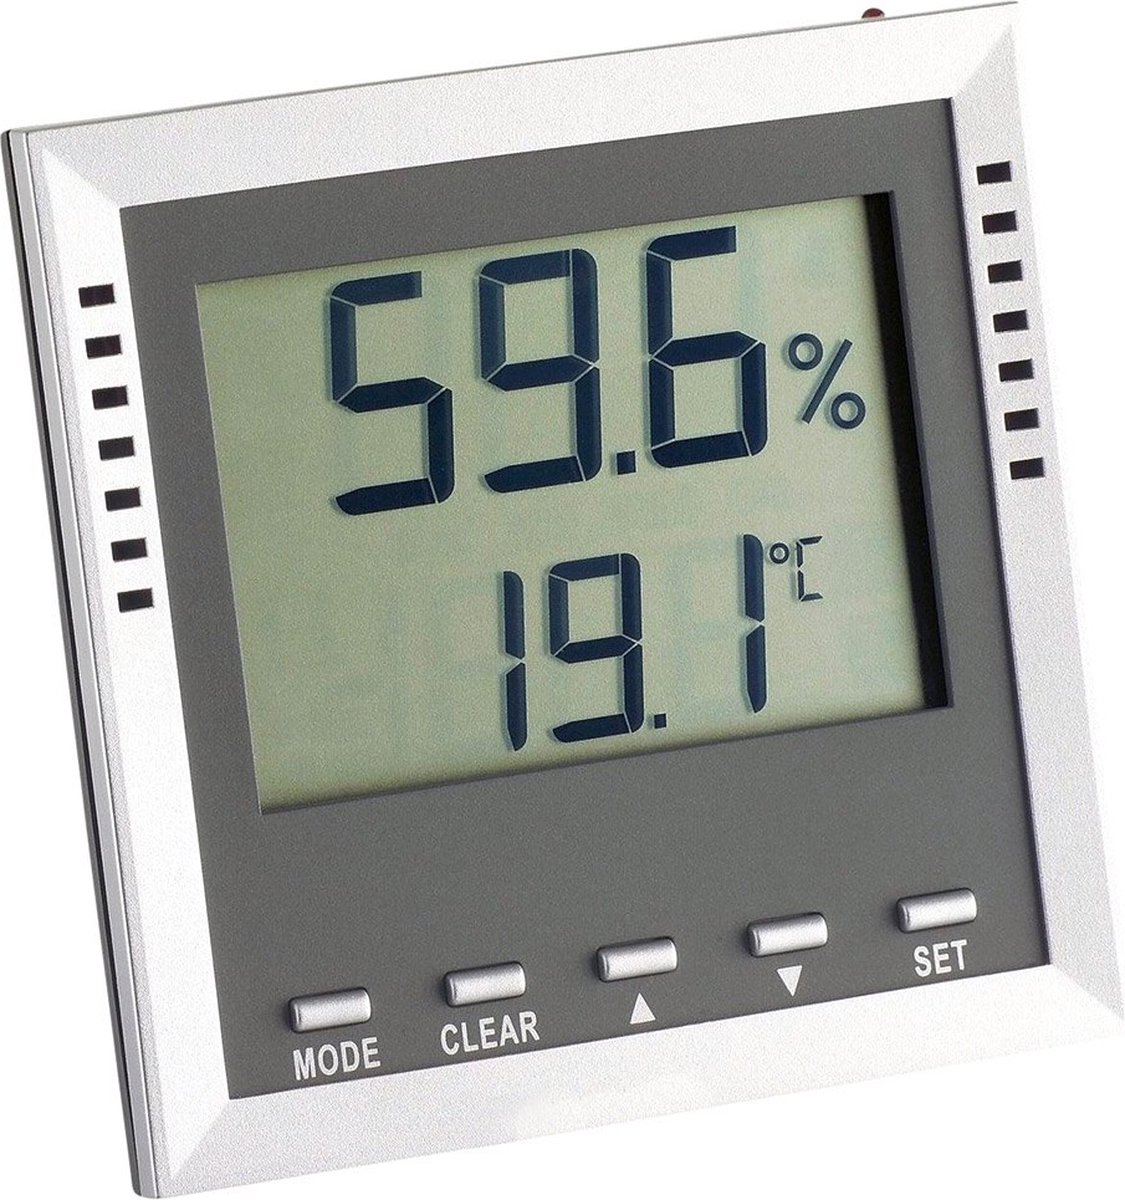 TFA 30.5010 - Thermo-Hygrometer